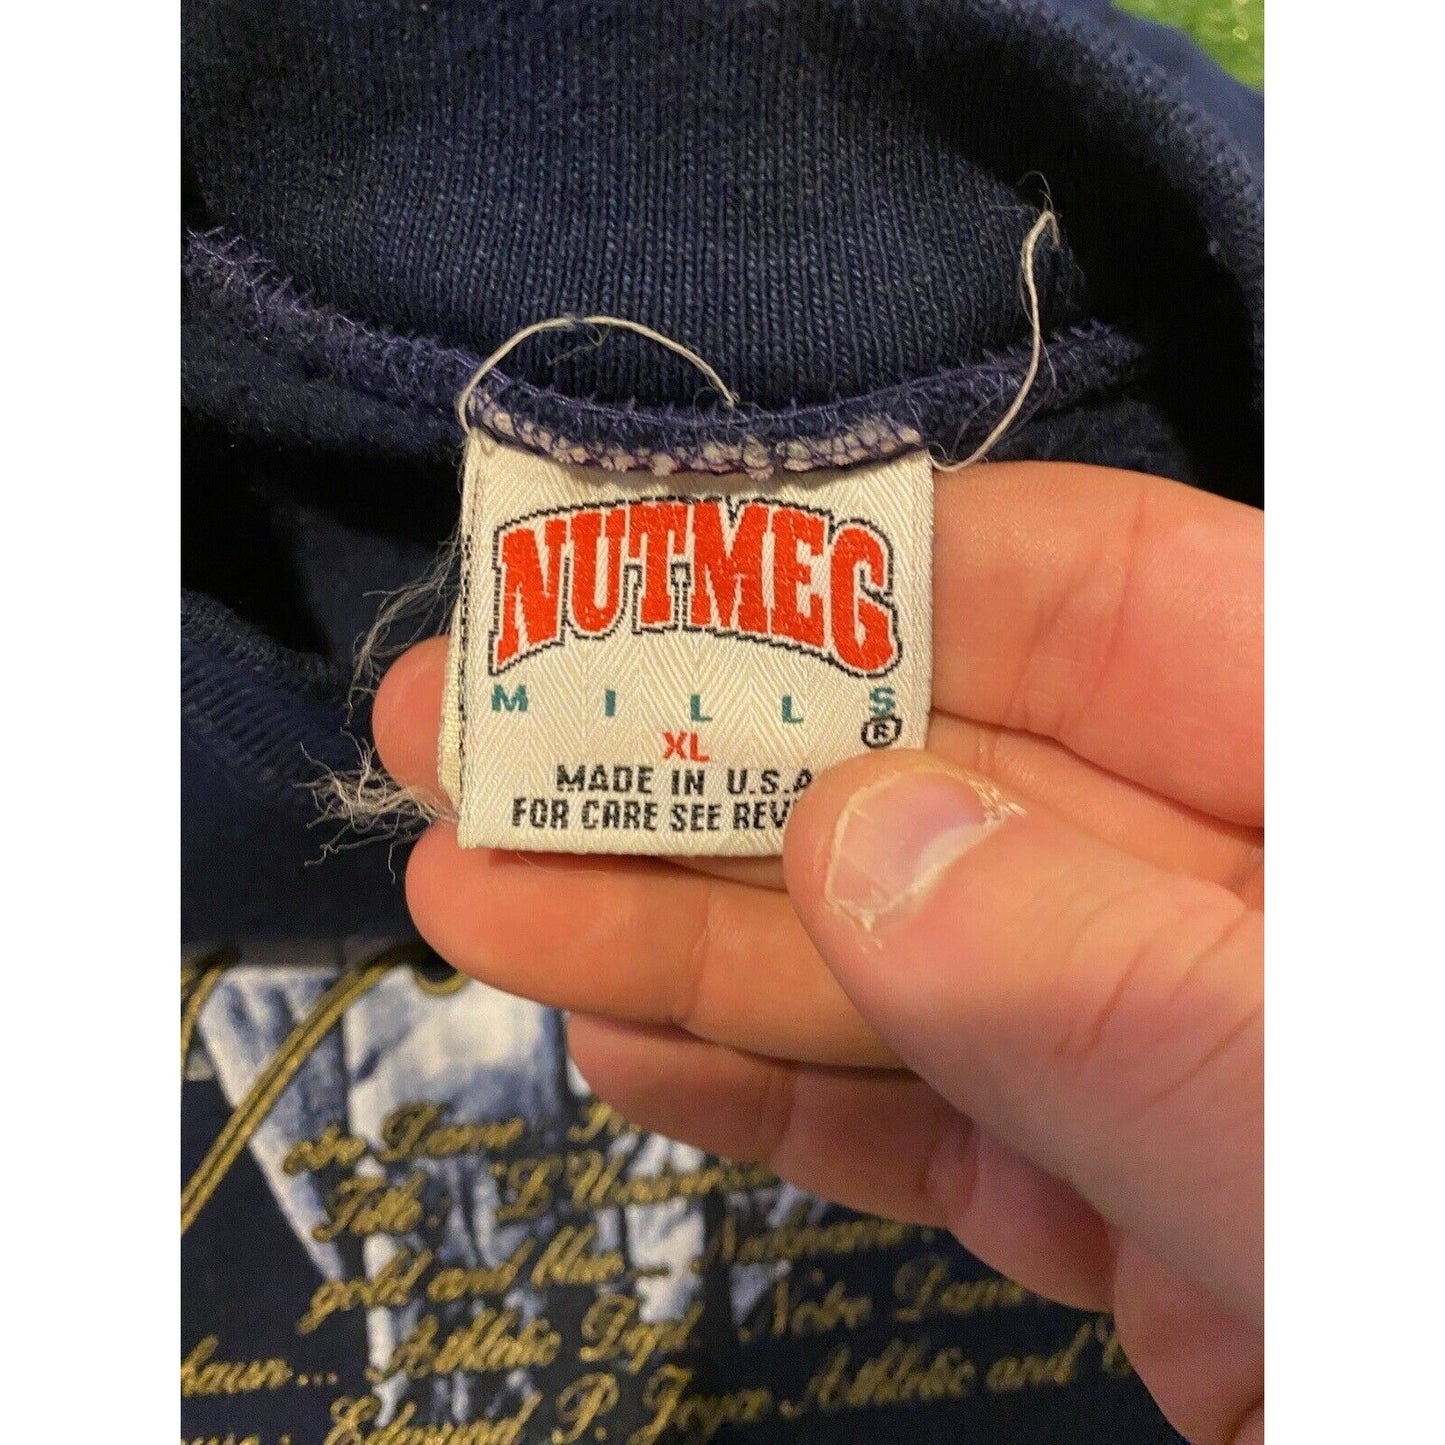 Vintage Notre Dame football sweatshirt extra large blue Nutmeg mills crew neck